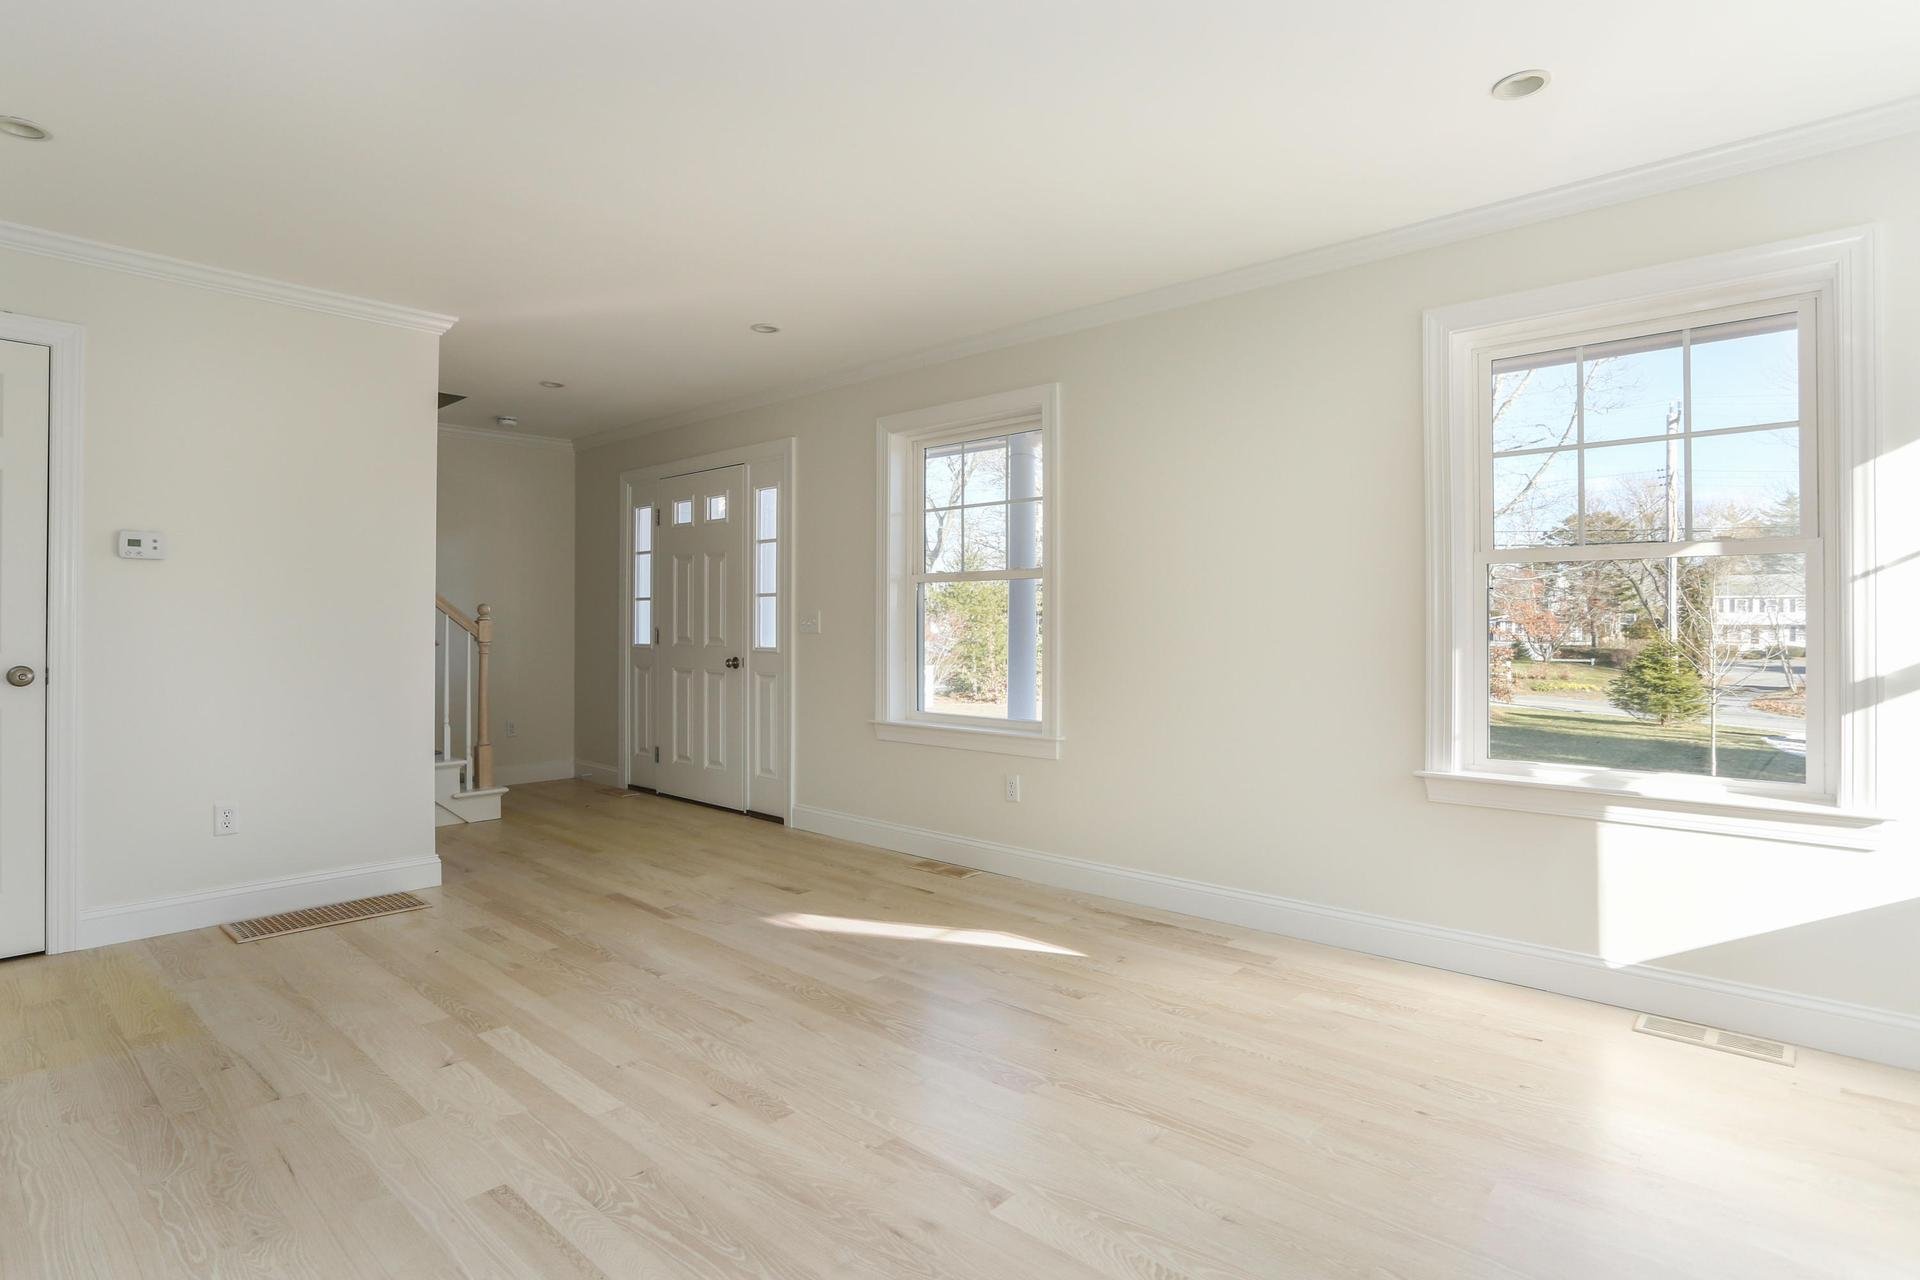 White Stained Hardwood Floors in modular home.jpeg